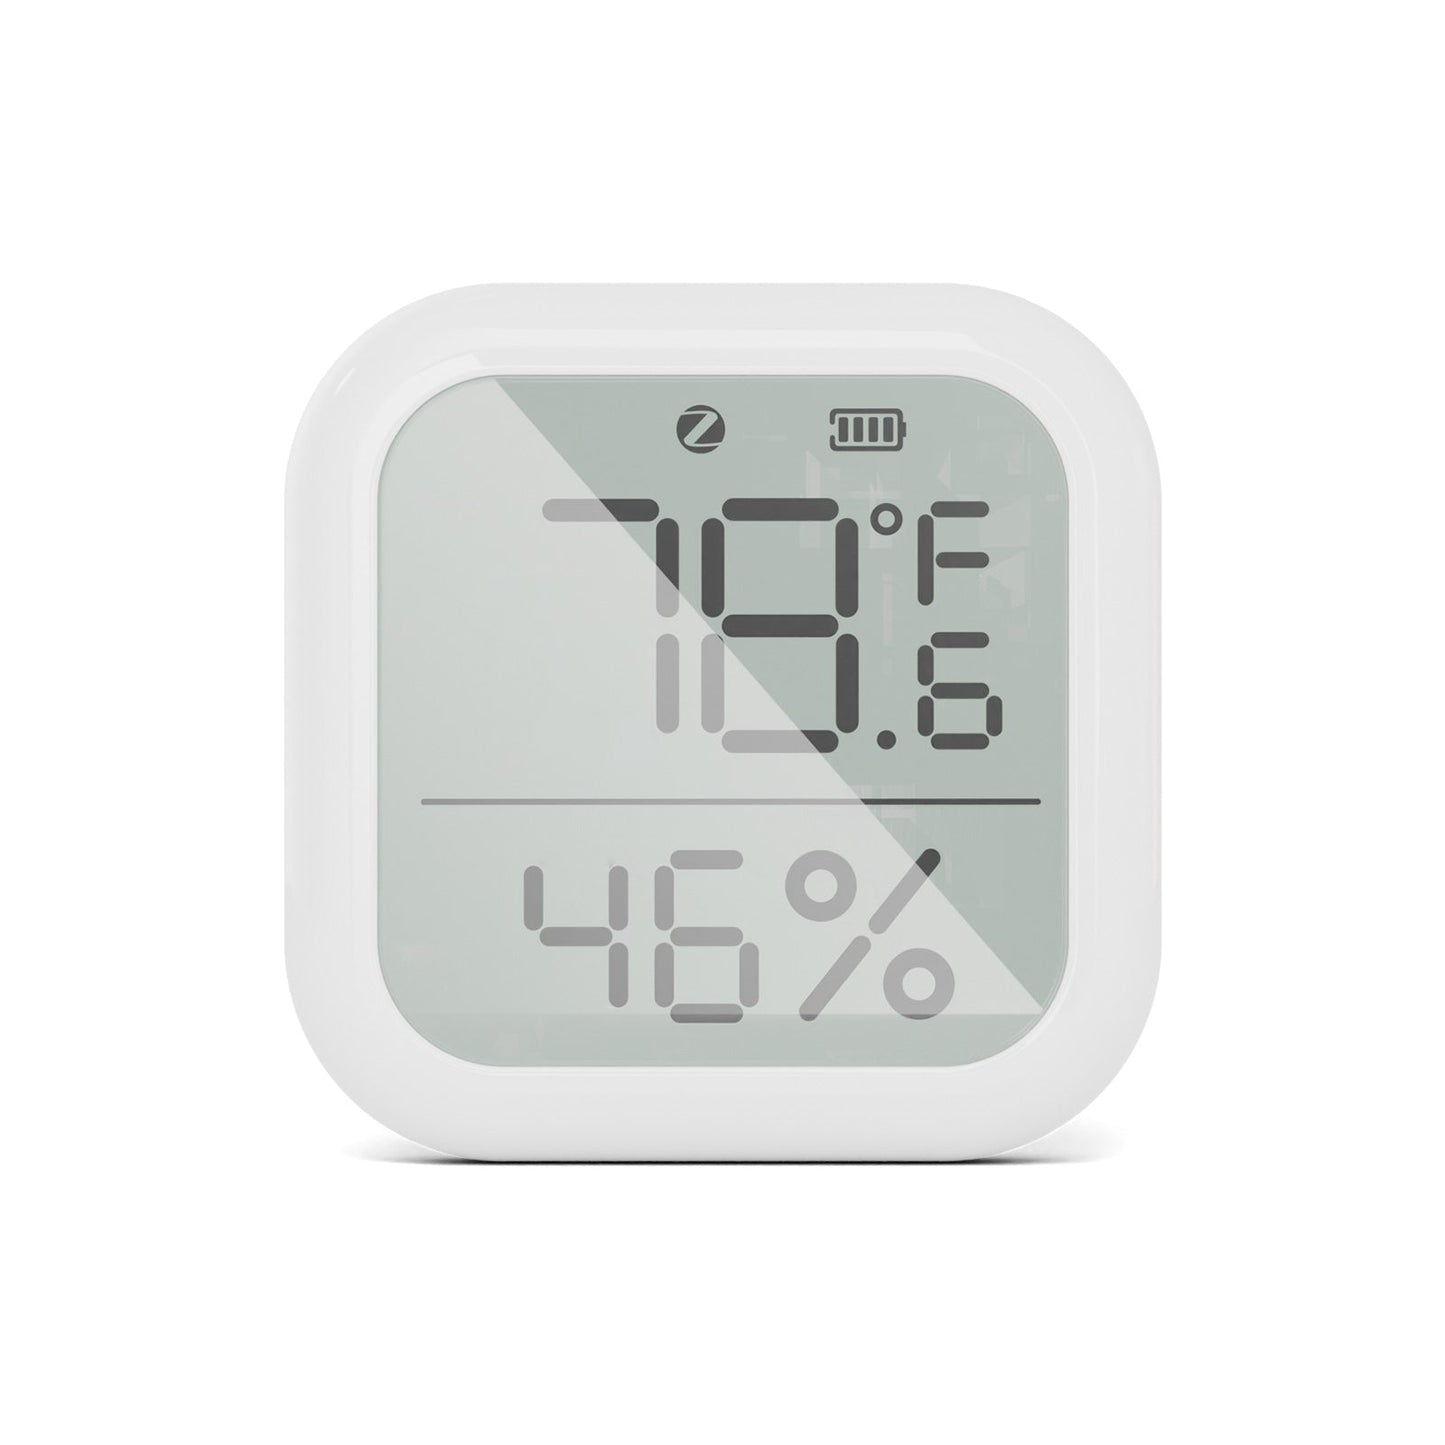 Zigbee smart temperature and humidity sensor Moes